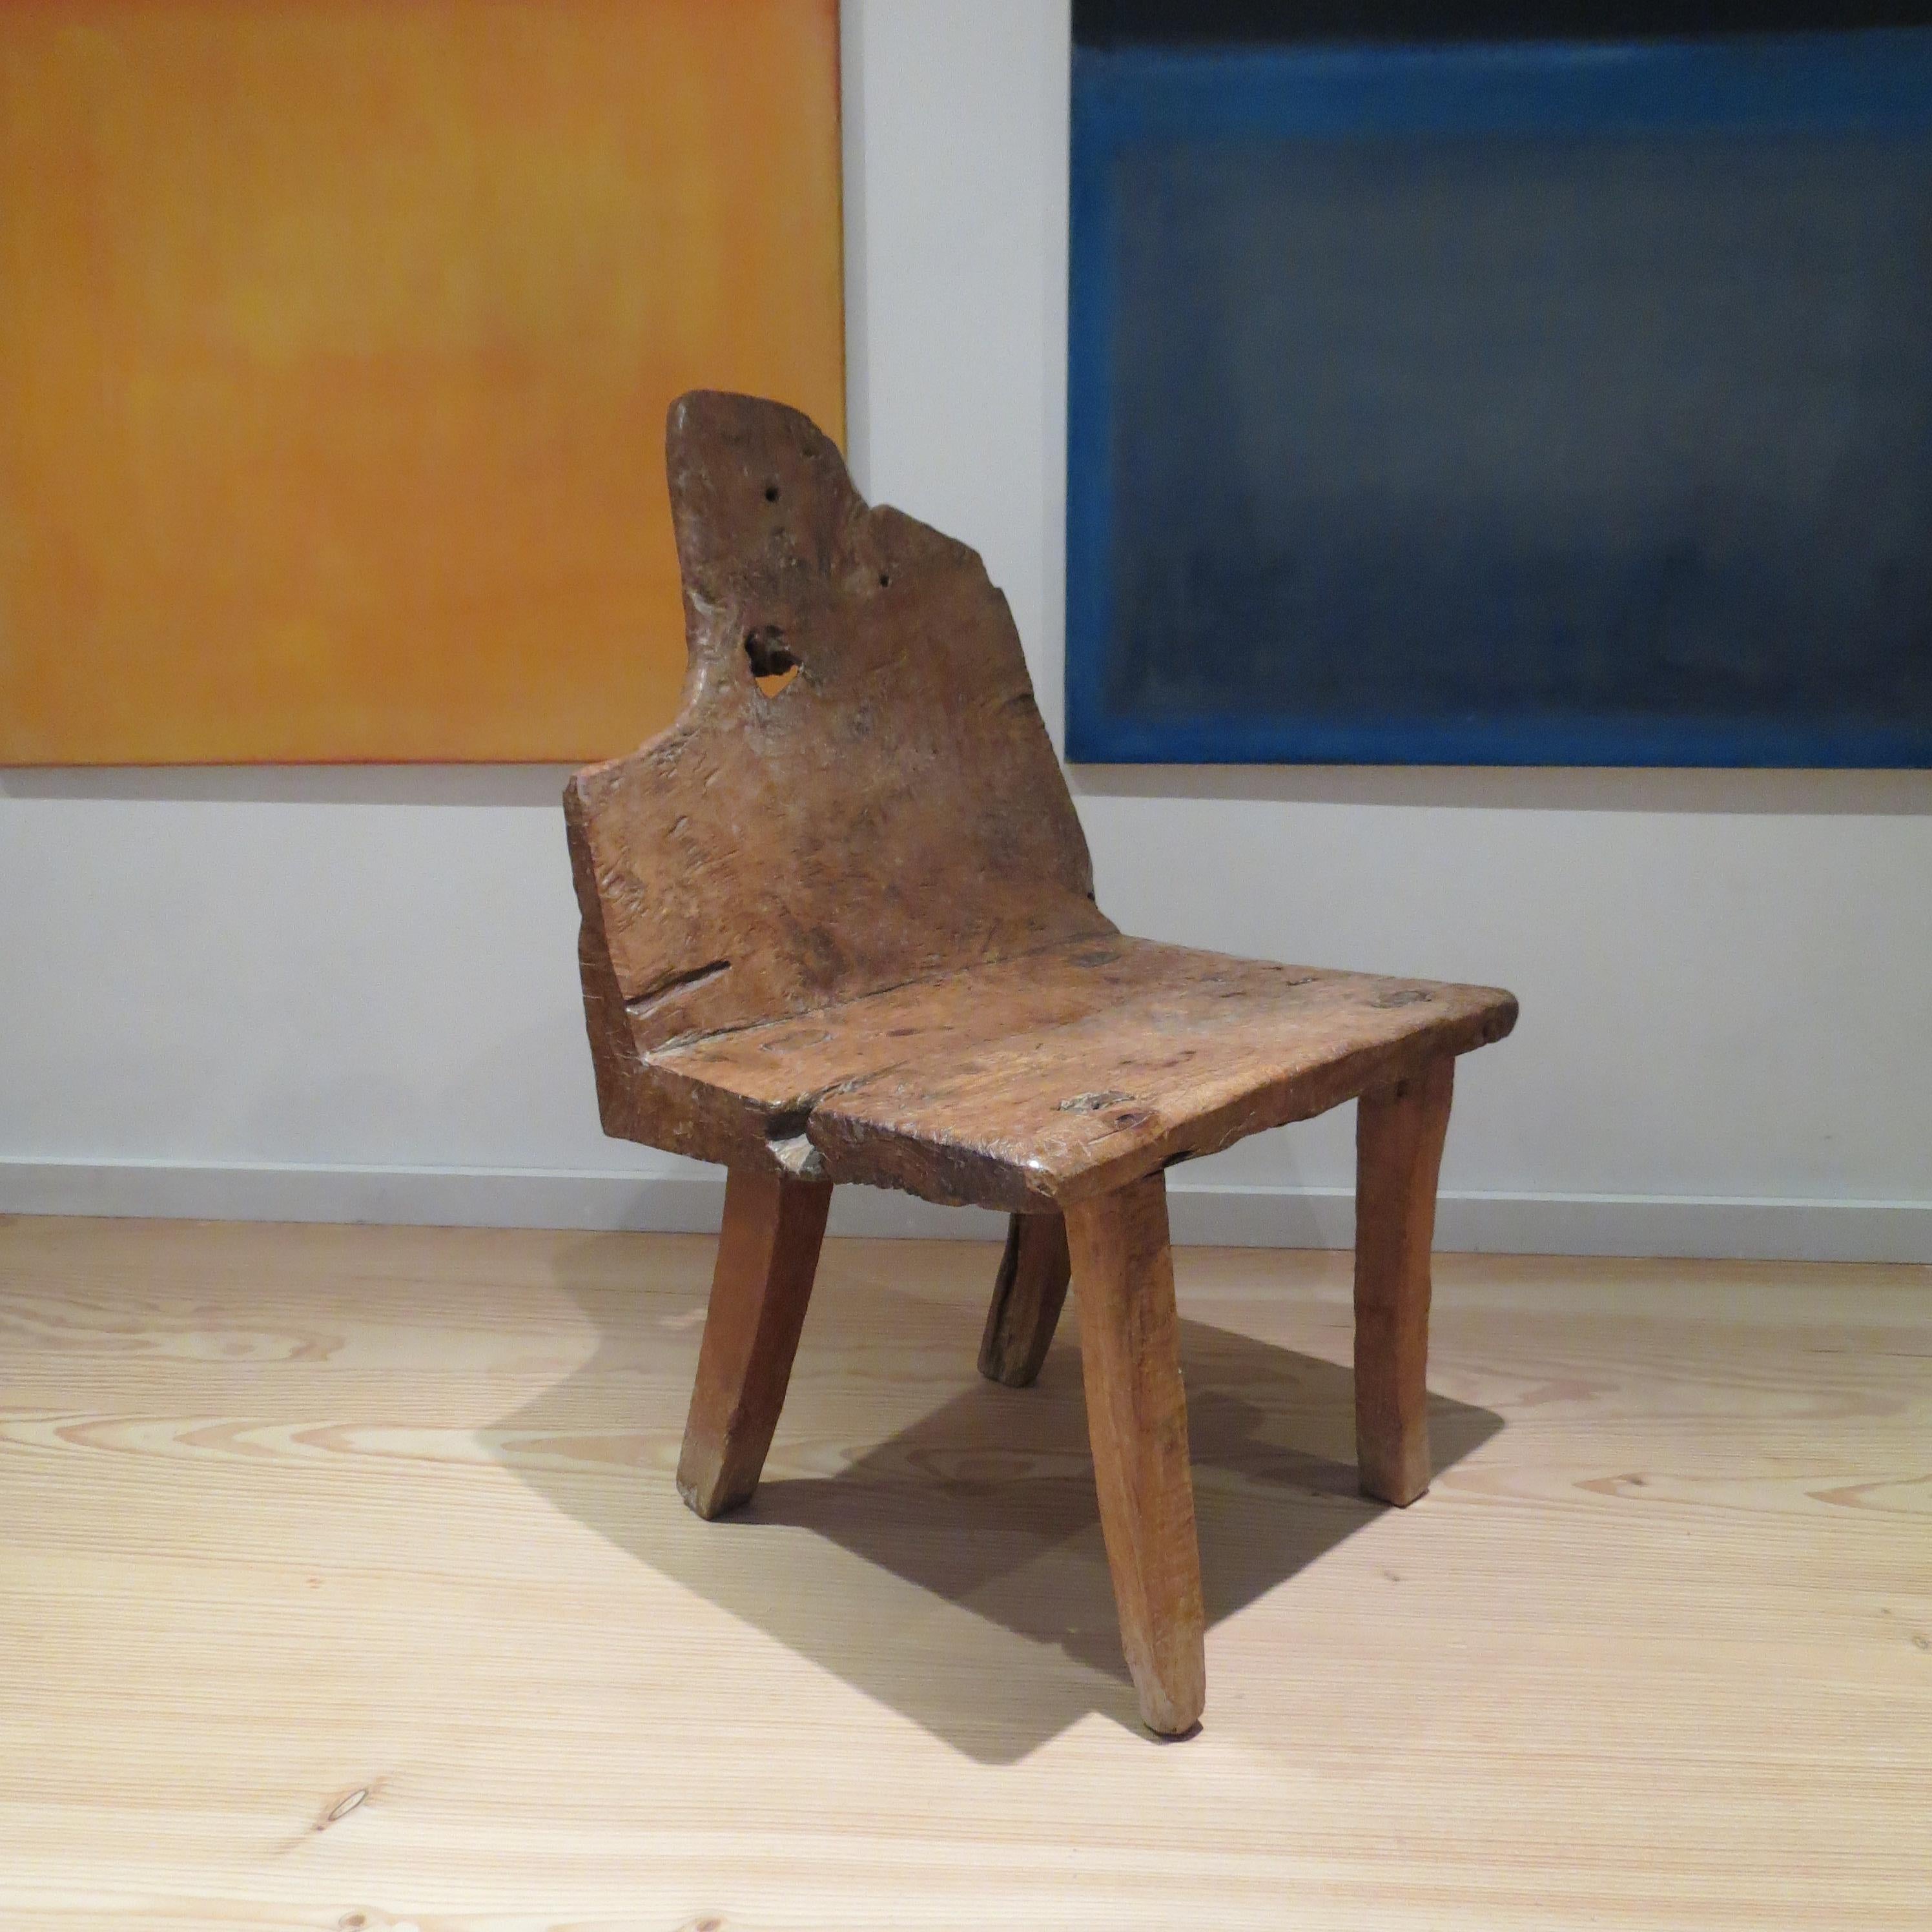 Rare Primitive Walnut Chair 19th Century English Wabi Sabi style 4